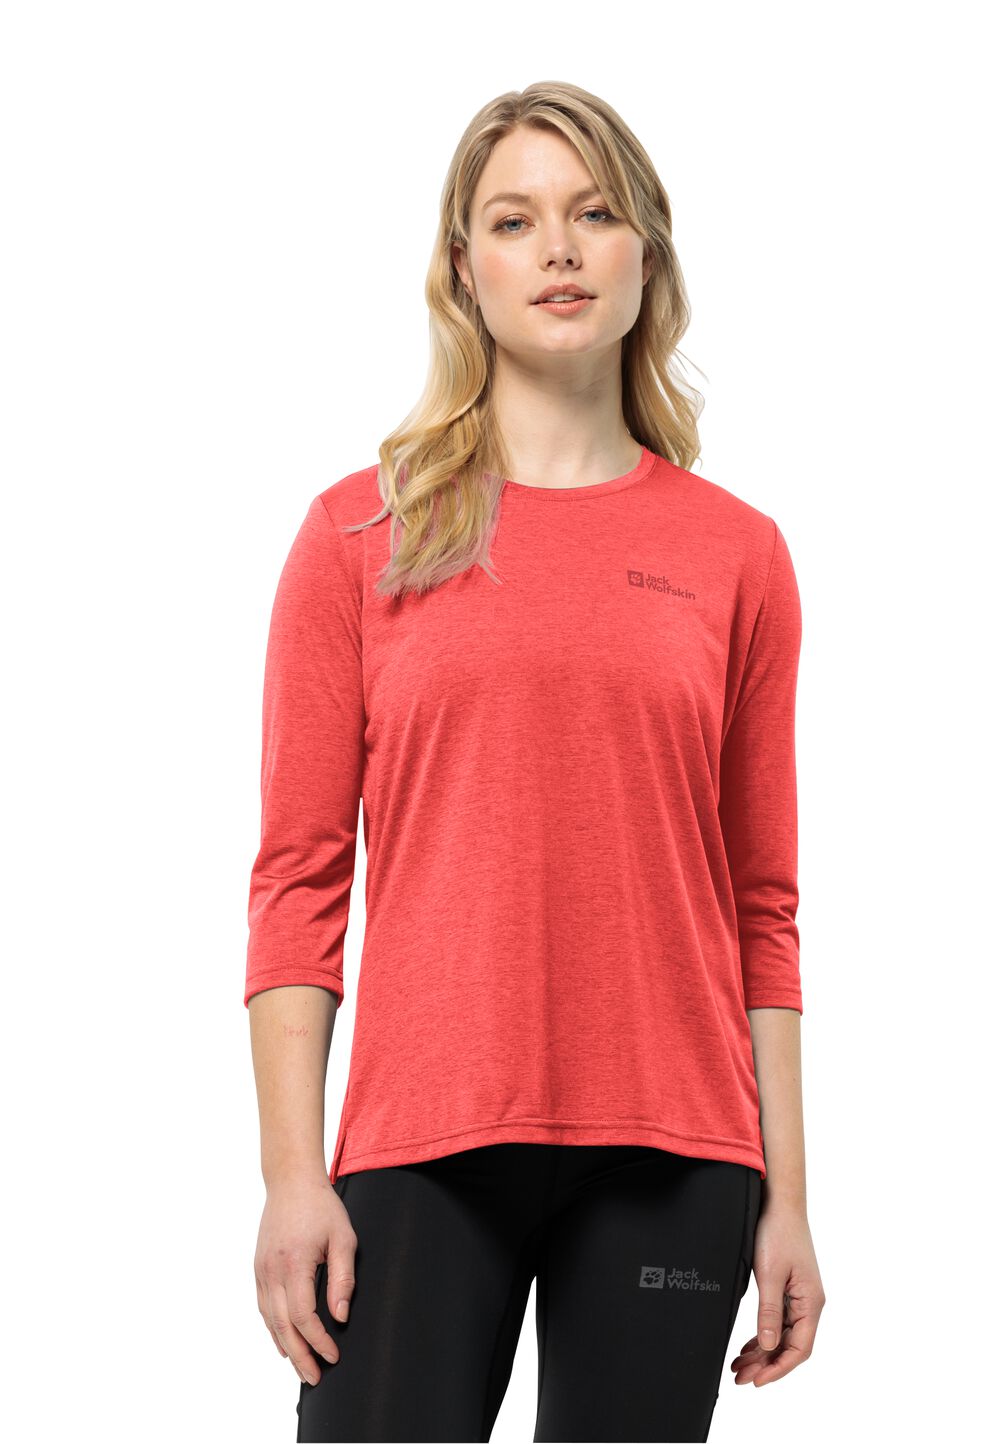 Jack Wolfskin Crosstrail 3 4 T-Shirt Women Functioneel shirt Dames L rood vibrant red